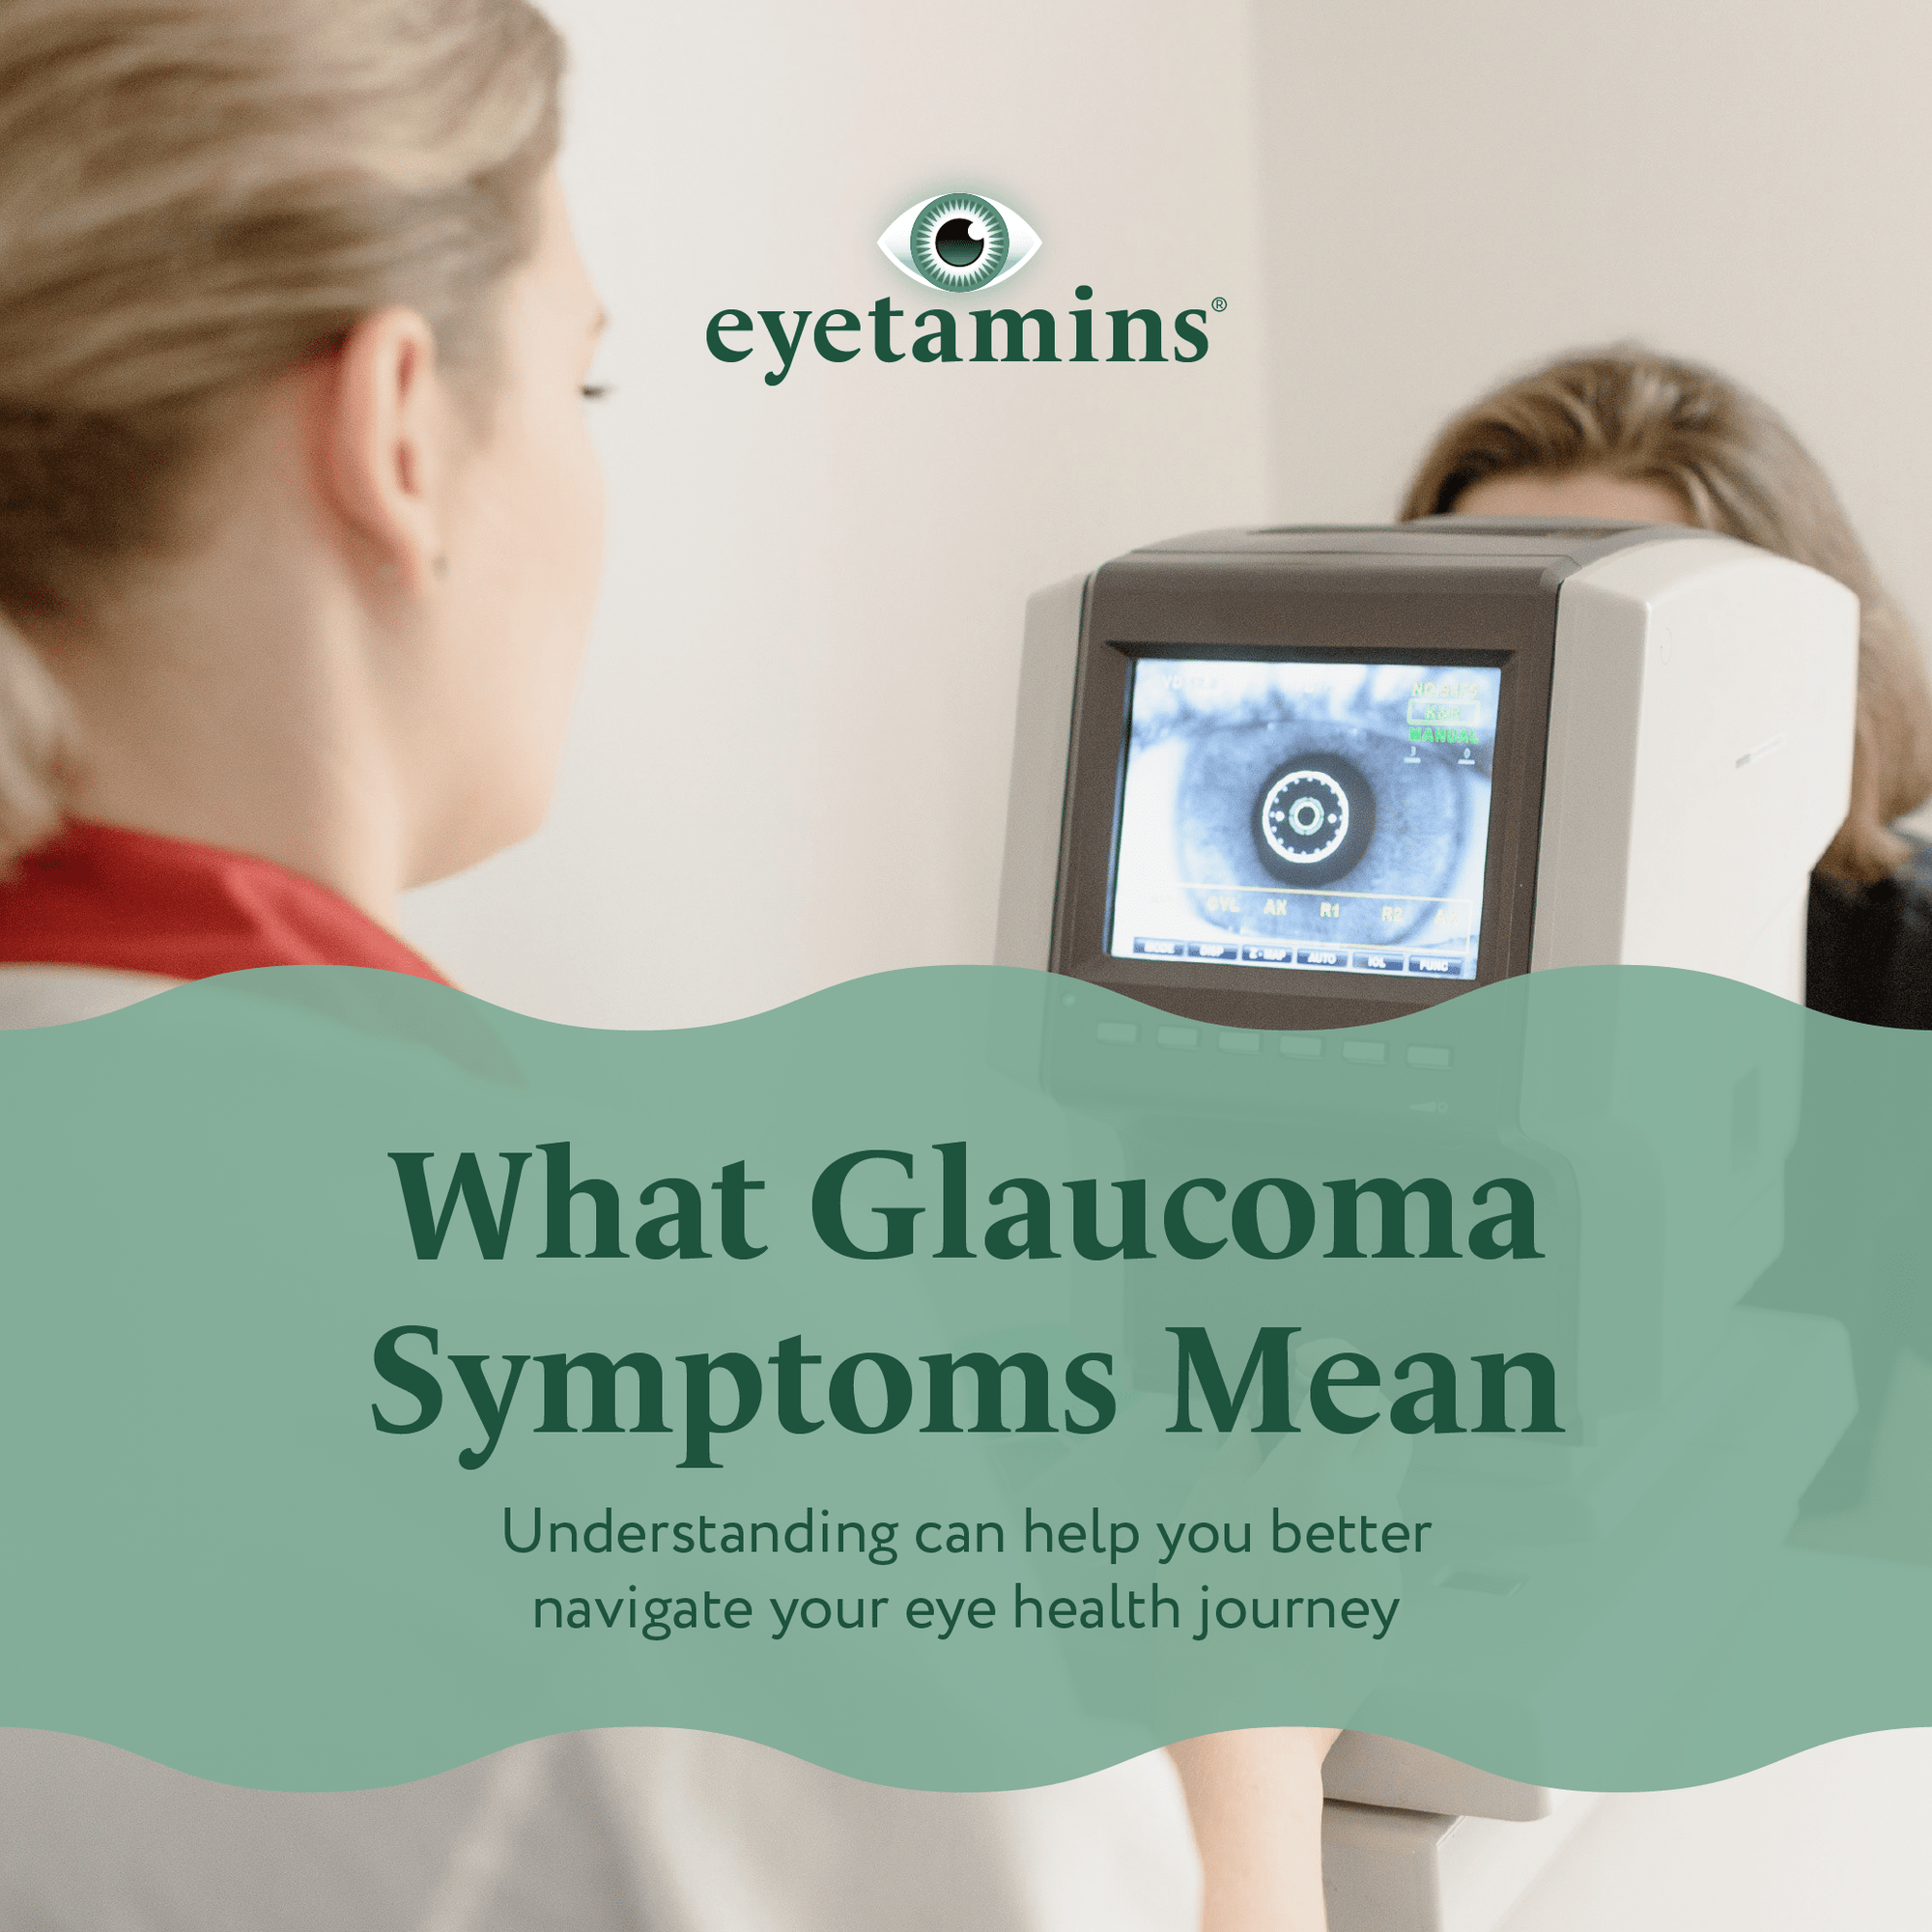 Eyetamins - What Glaucoma Symptoms Mean